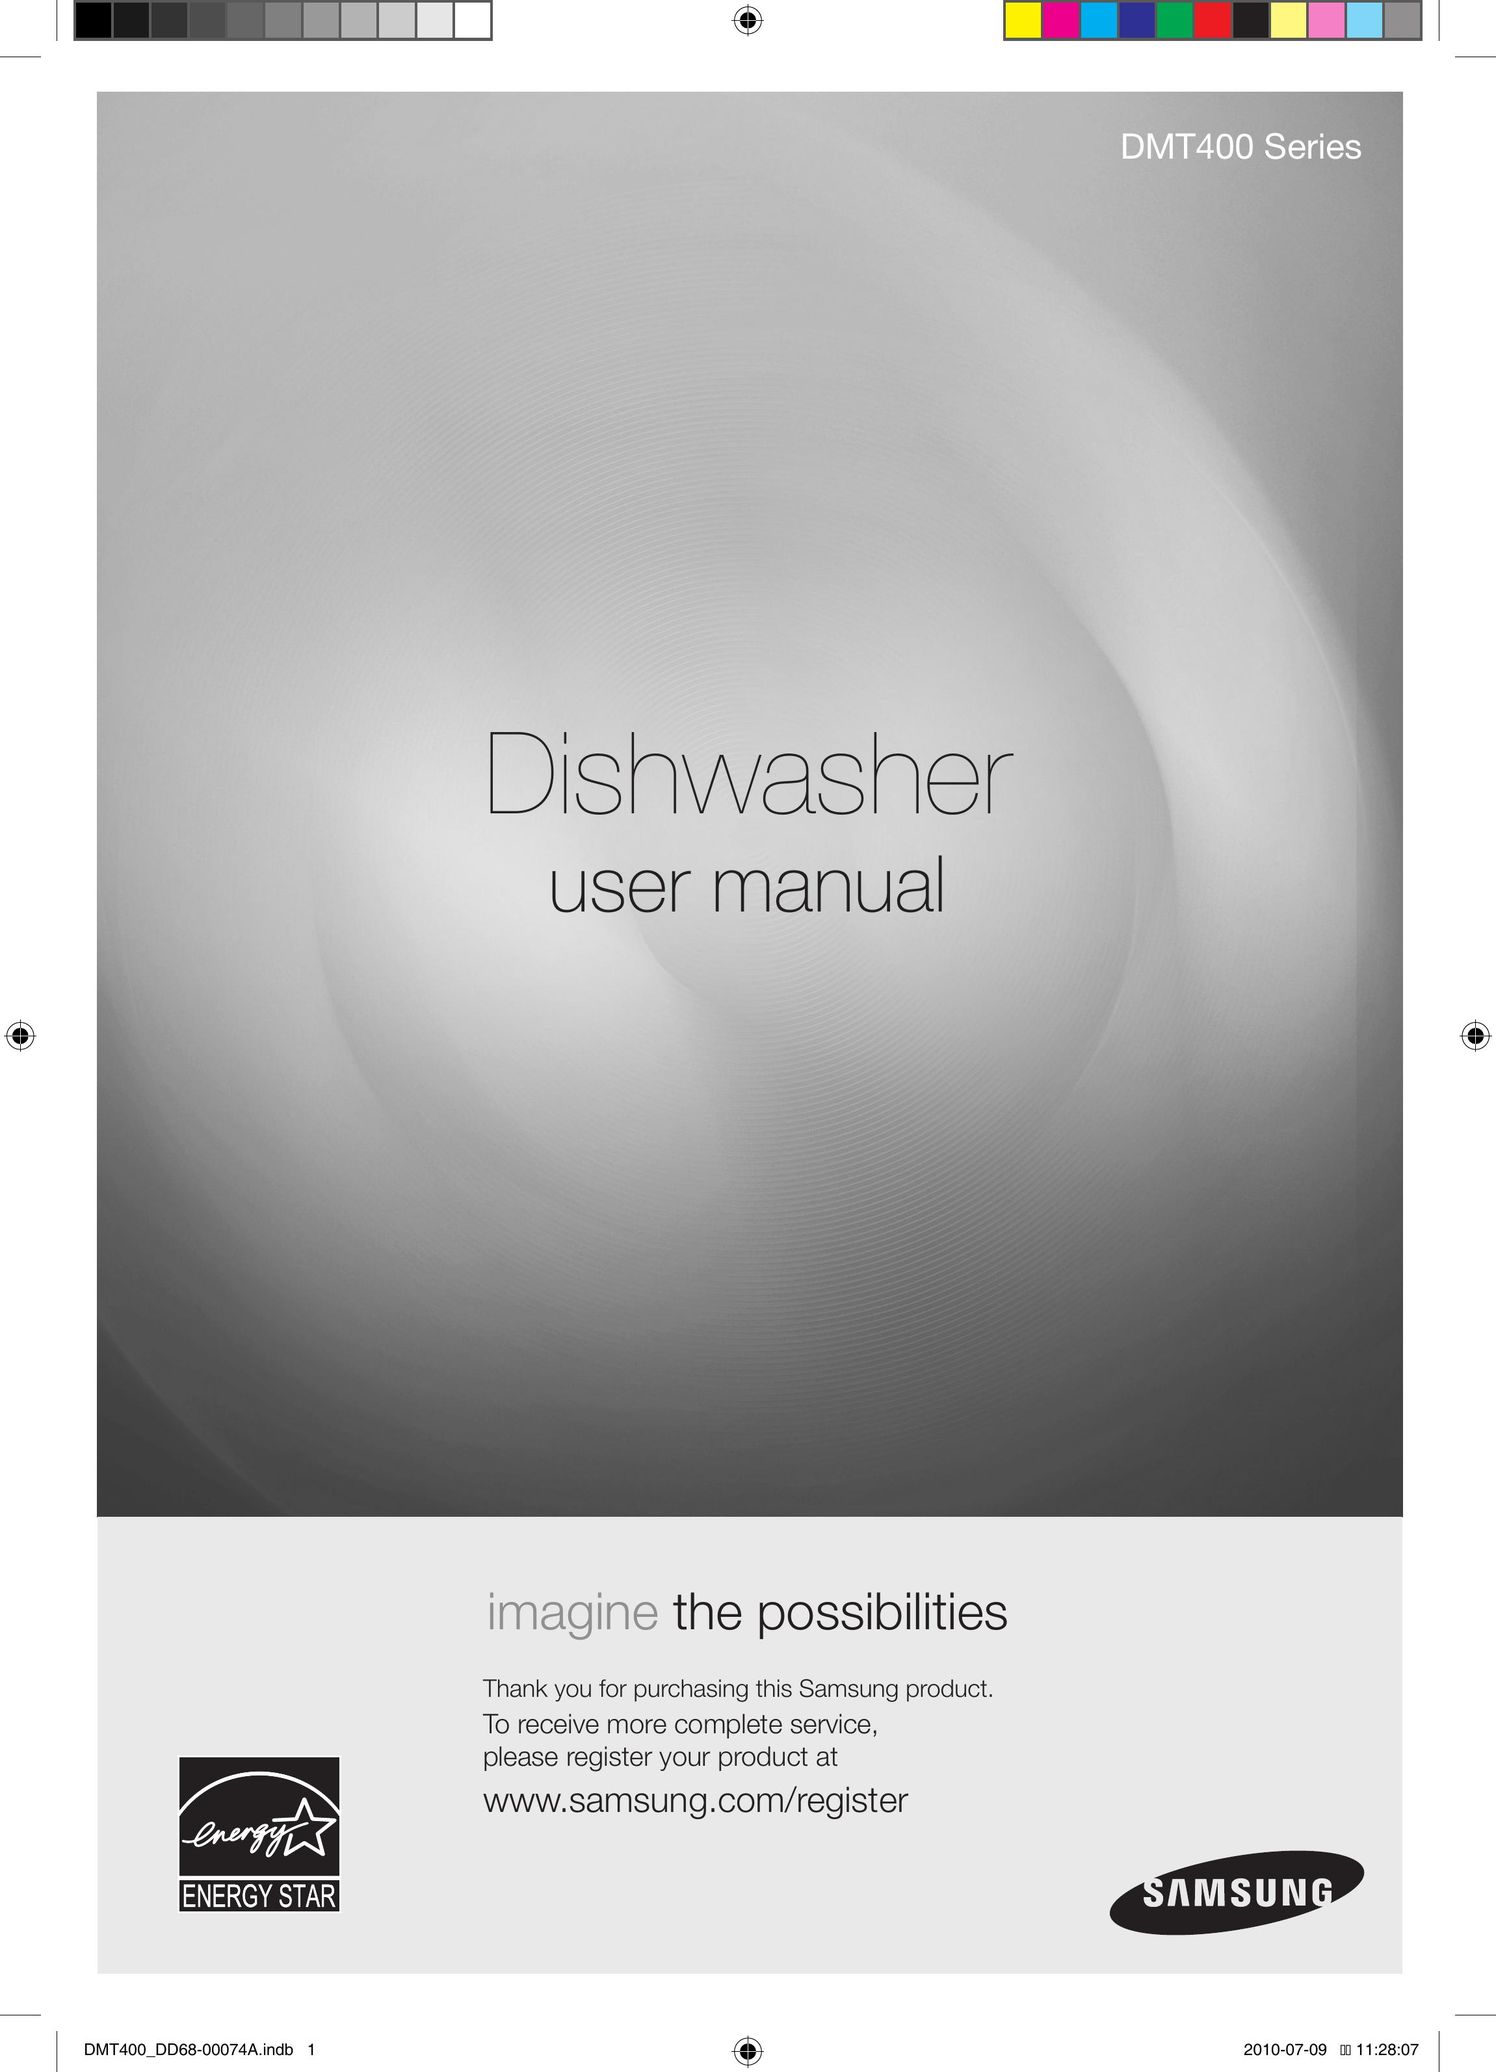 Samsung DMT400RHB Dishwasher User Manual